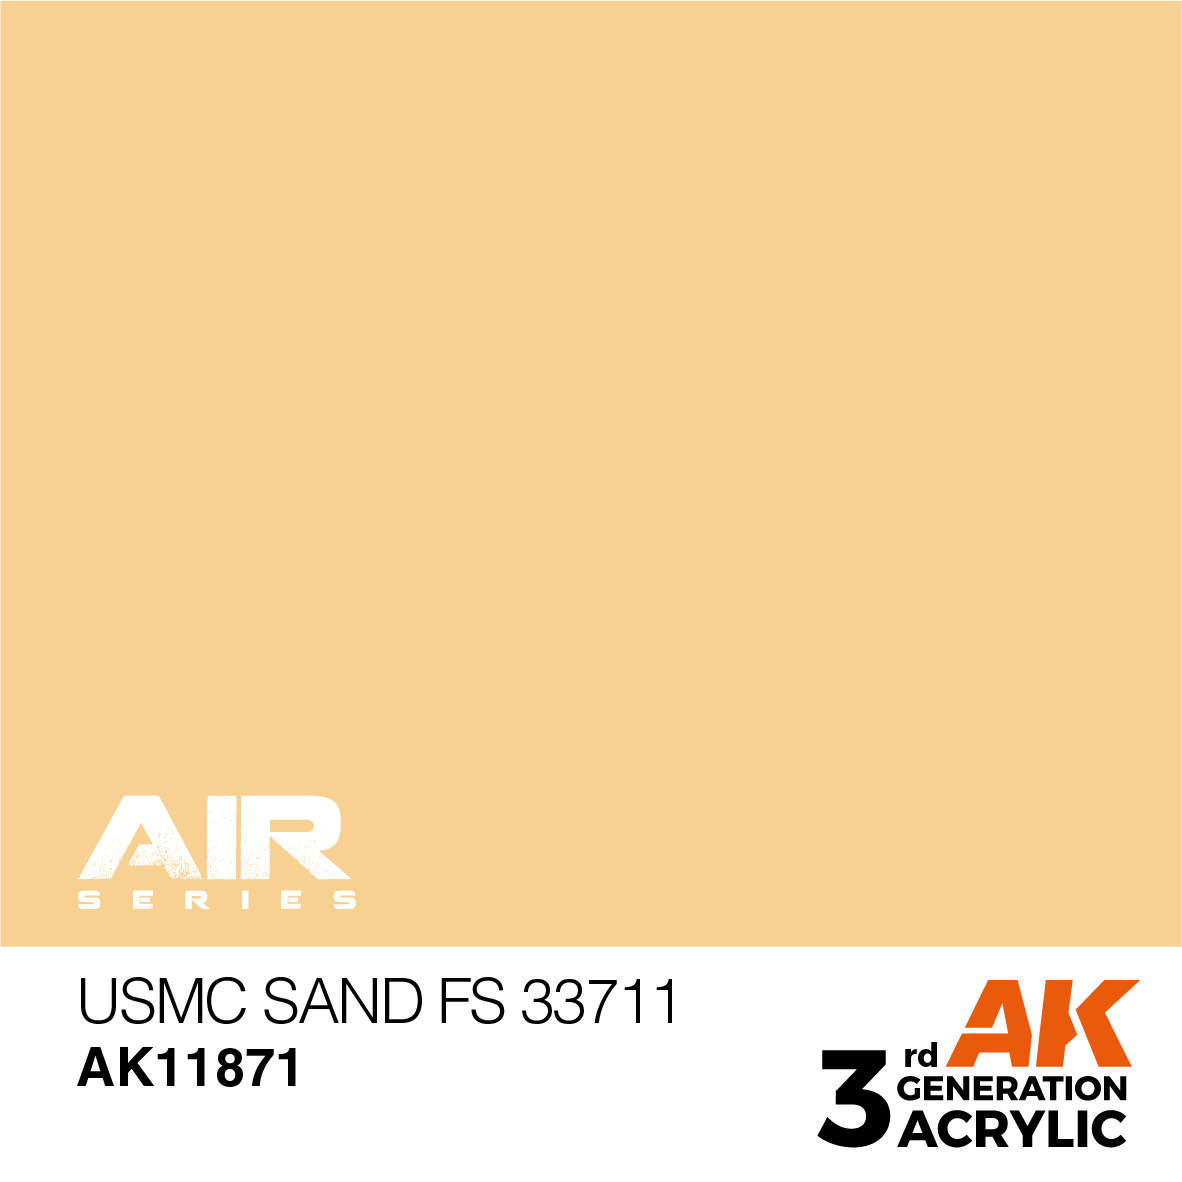 USMC Sand FS 33711 – AIR